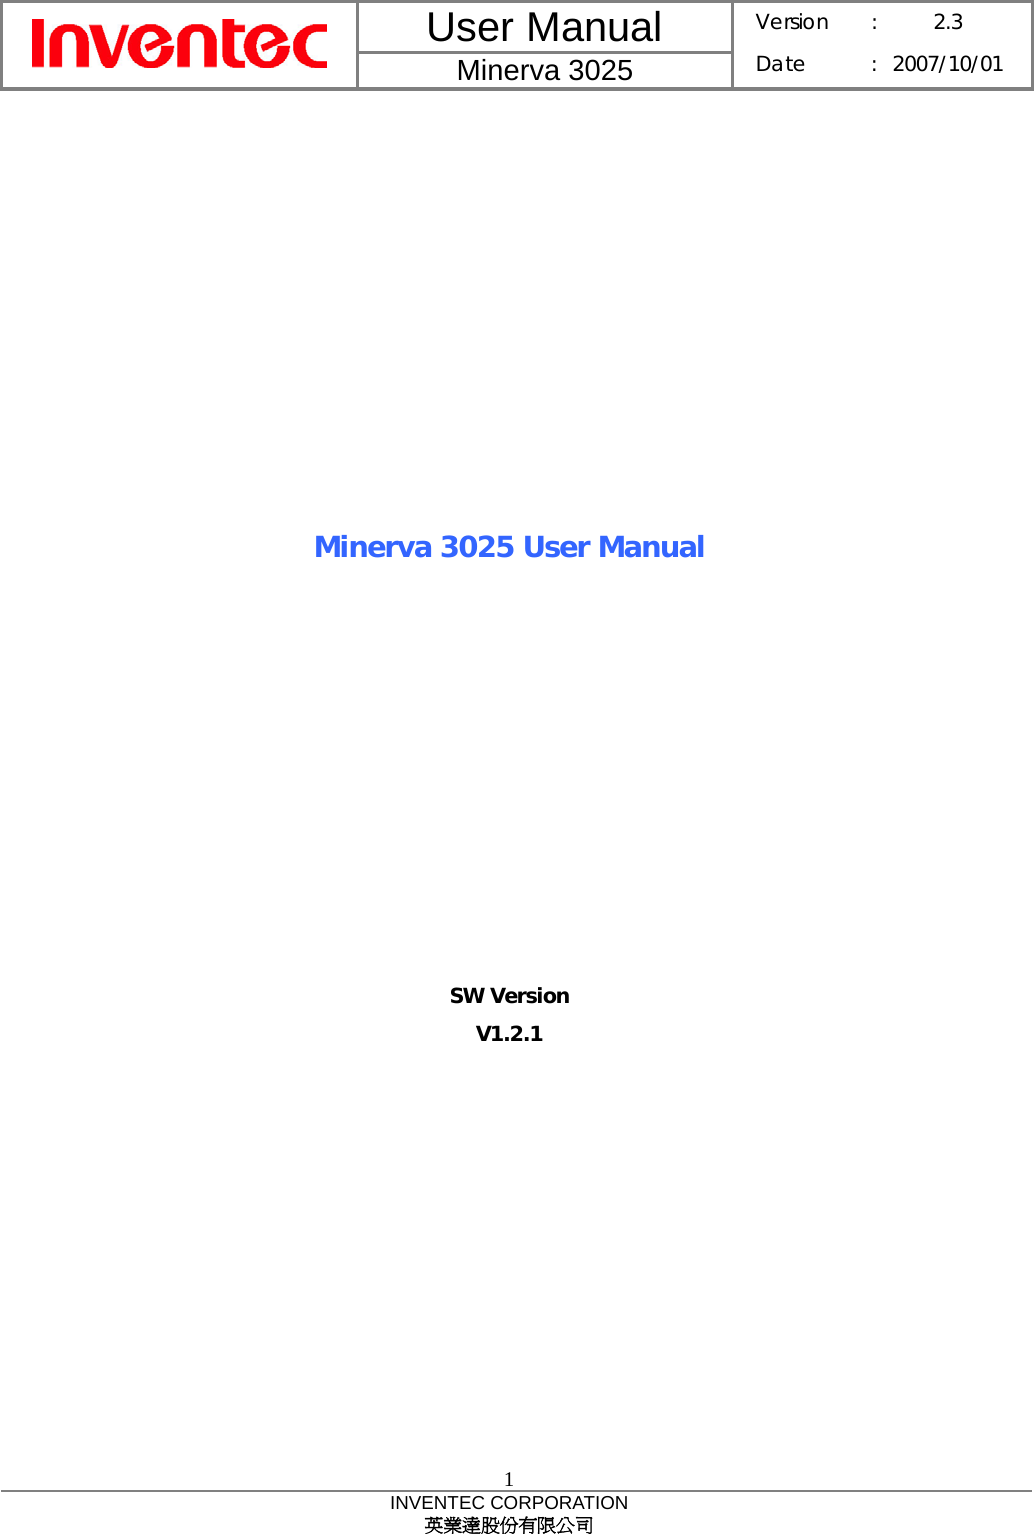 User Manual  Minerva 3025 Version :  2.3 Date : 2007/10/01  1 INVENTEC CORPORATION 英業達股份有限公司             Minerva 3025 User Manual            SW Version V1.2.1 